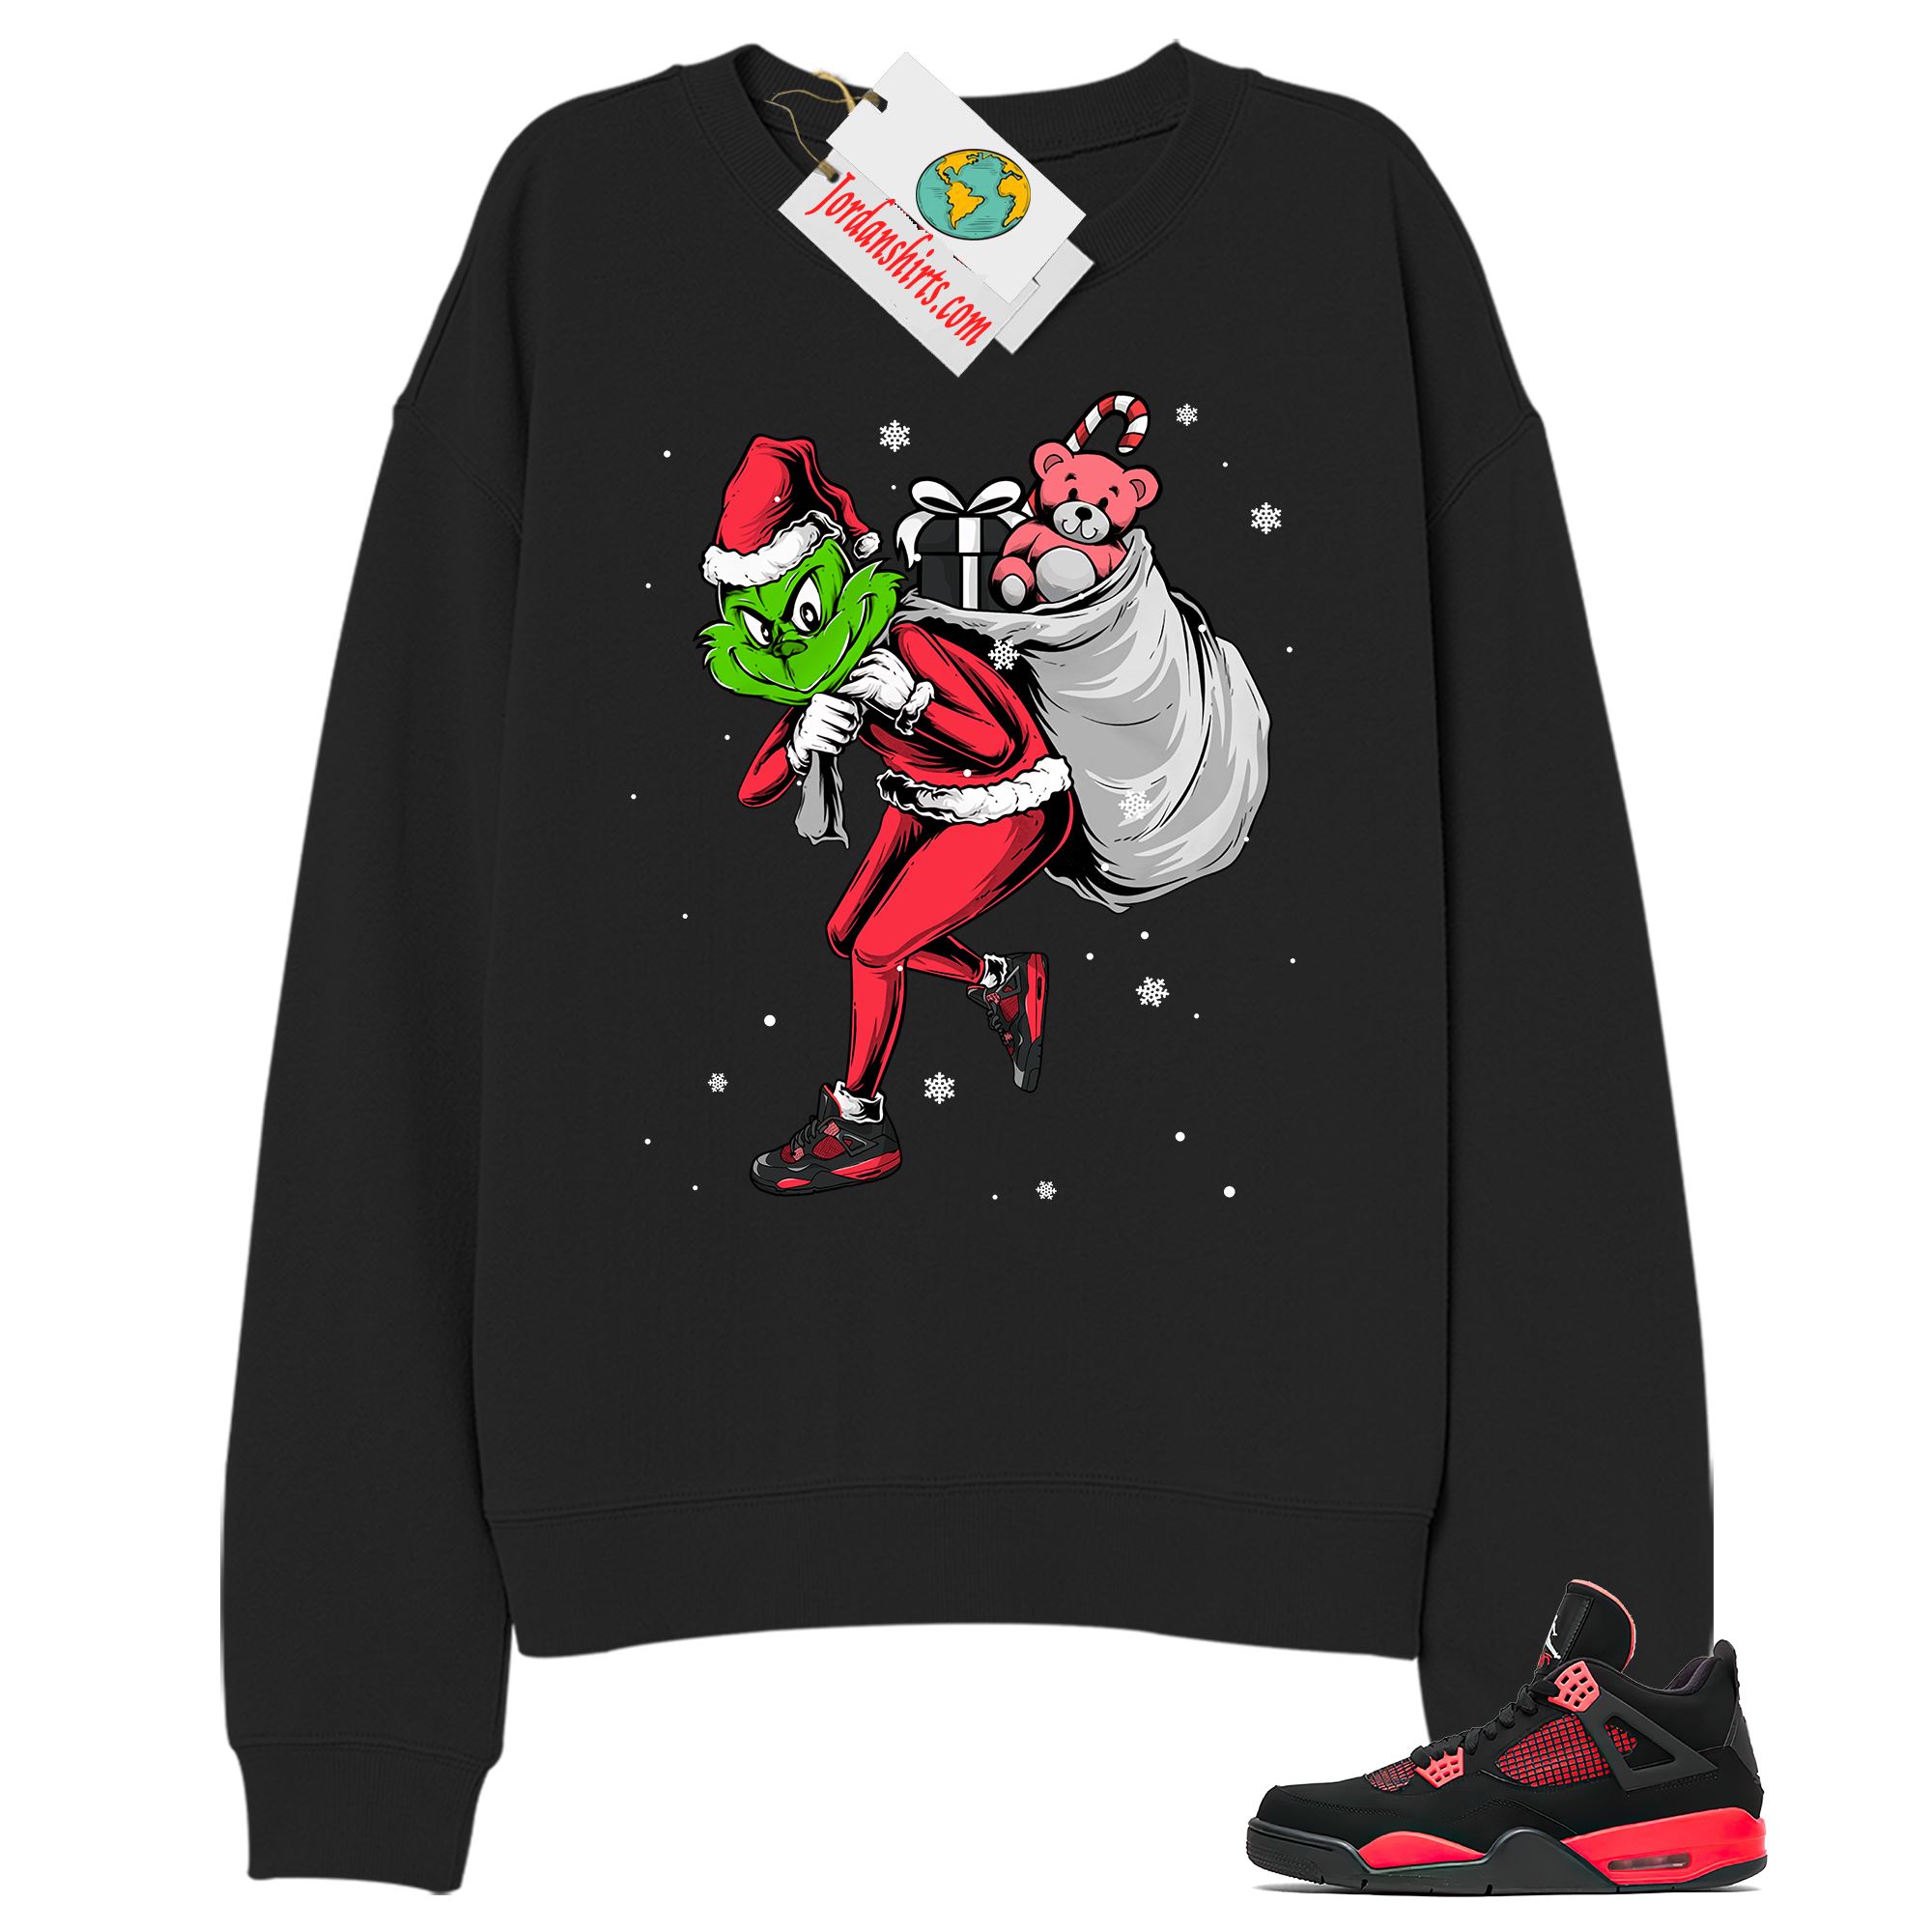 Jordan 4 Sweatshirt, Grinch Stolen Christmas Black Sweatshirt Air Jordan 4 Red Thunder 4s Plus Size Up To 5xl